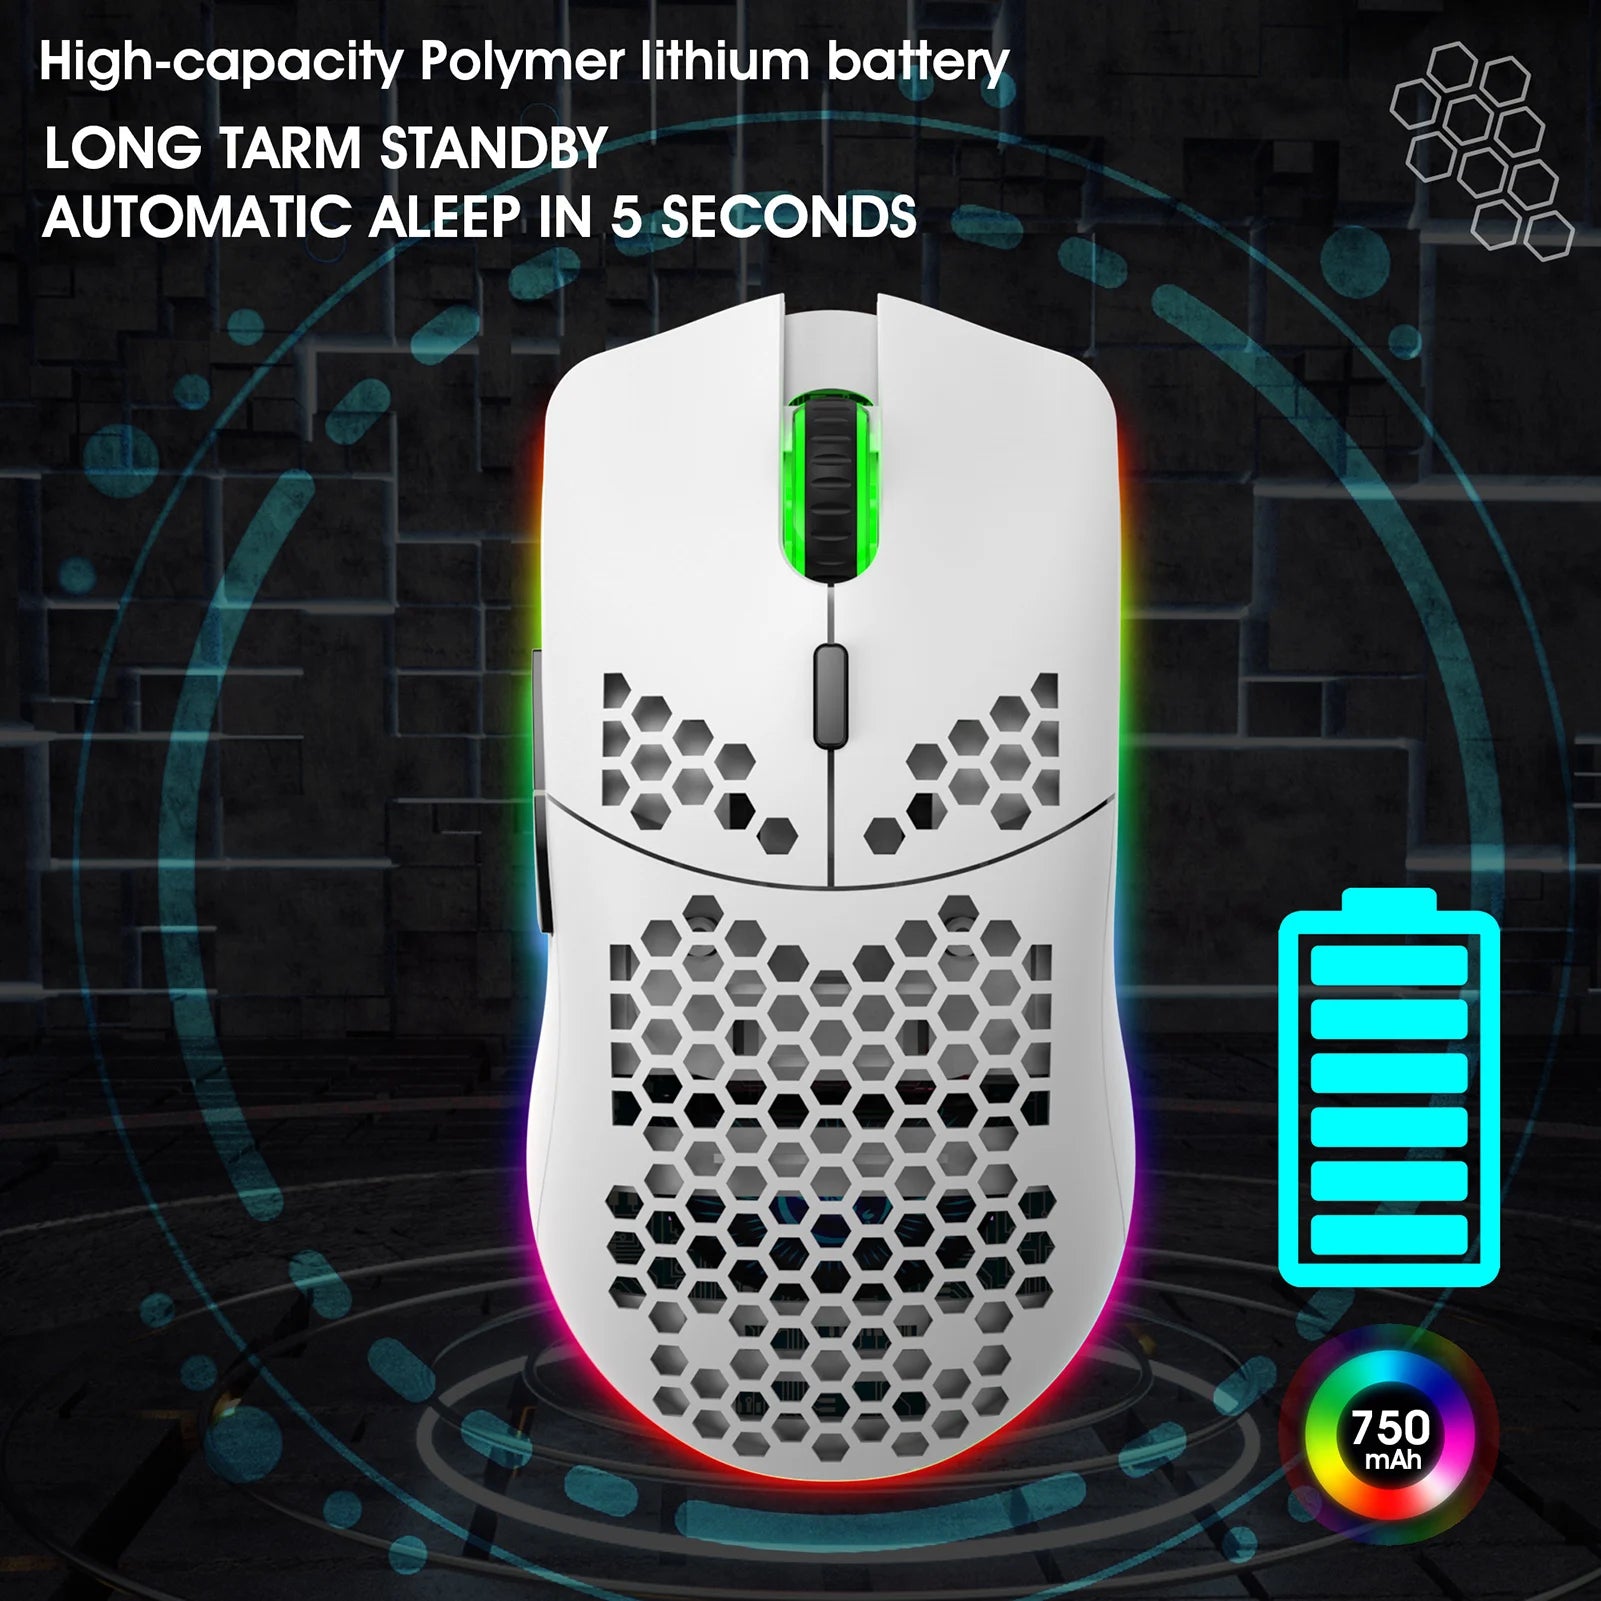 HXSJ T66 RGB 2.4G Wireless Gaming Mouse RGB Lighting Charging Mouse with Adjustable DPI Ergonomic Design for Desktop Laptop